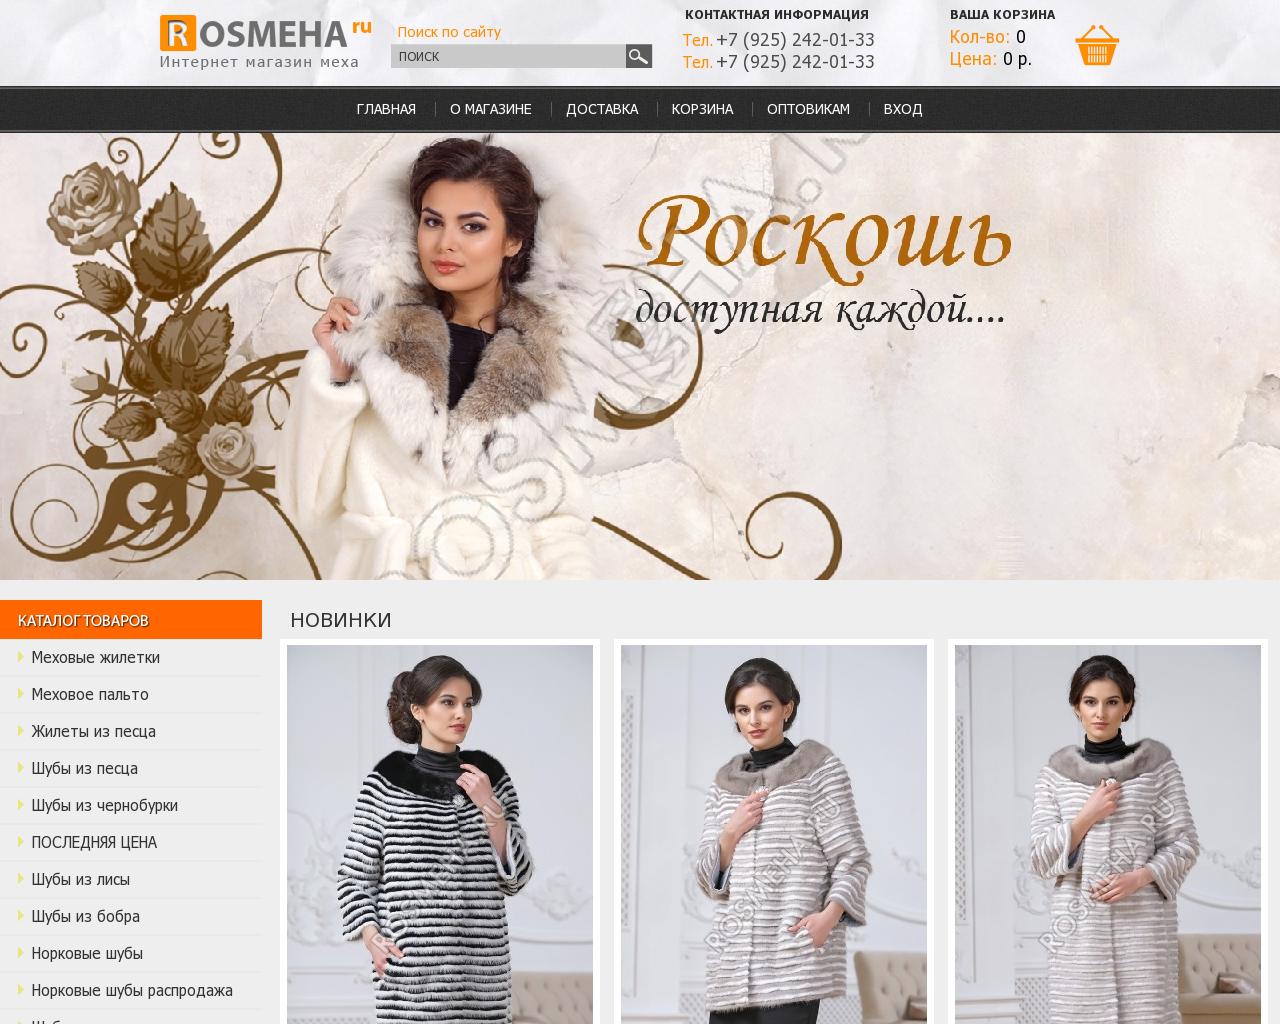 Изображение сайта rosmeha.ru в разрешении 1280x1024